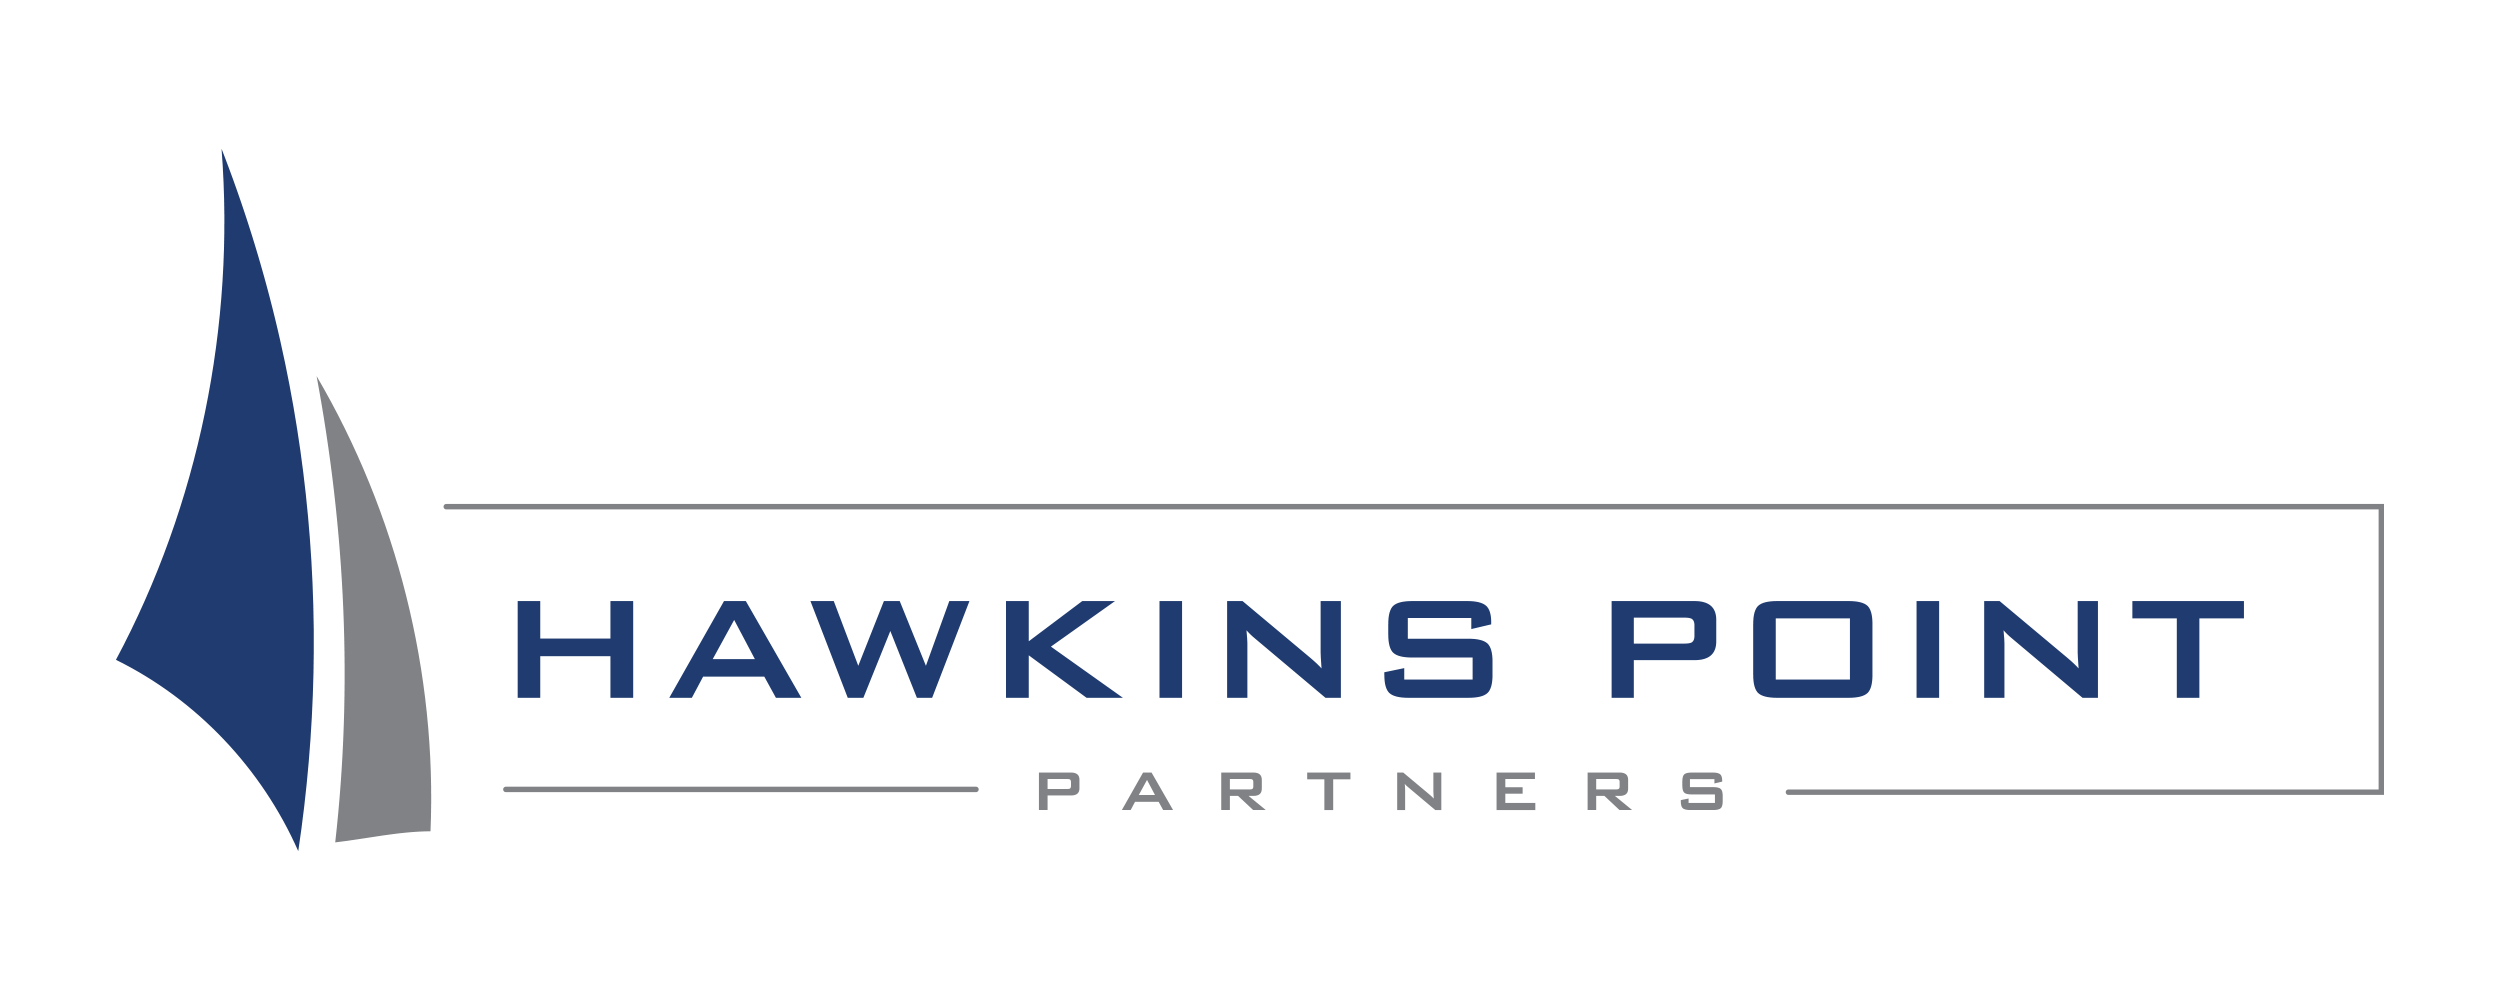 Hawkins Point Partners